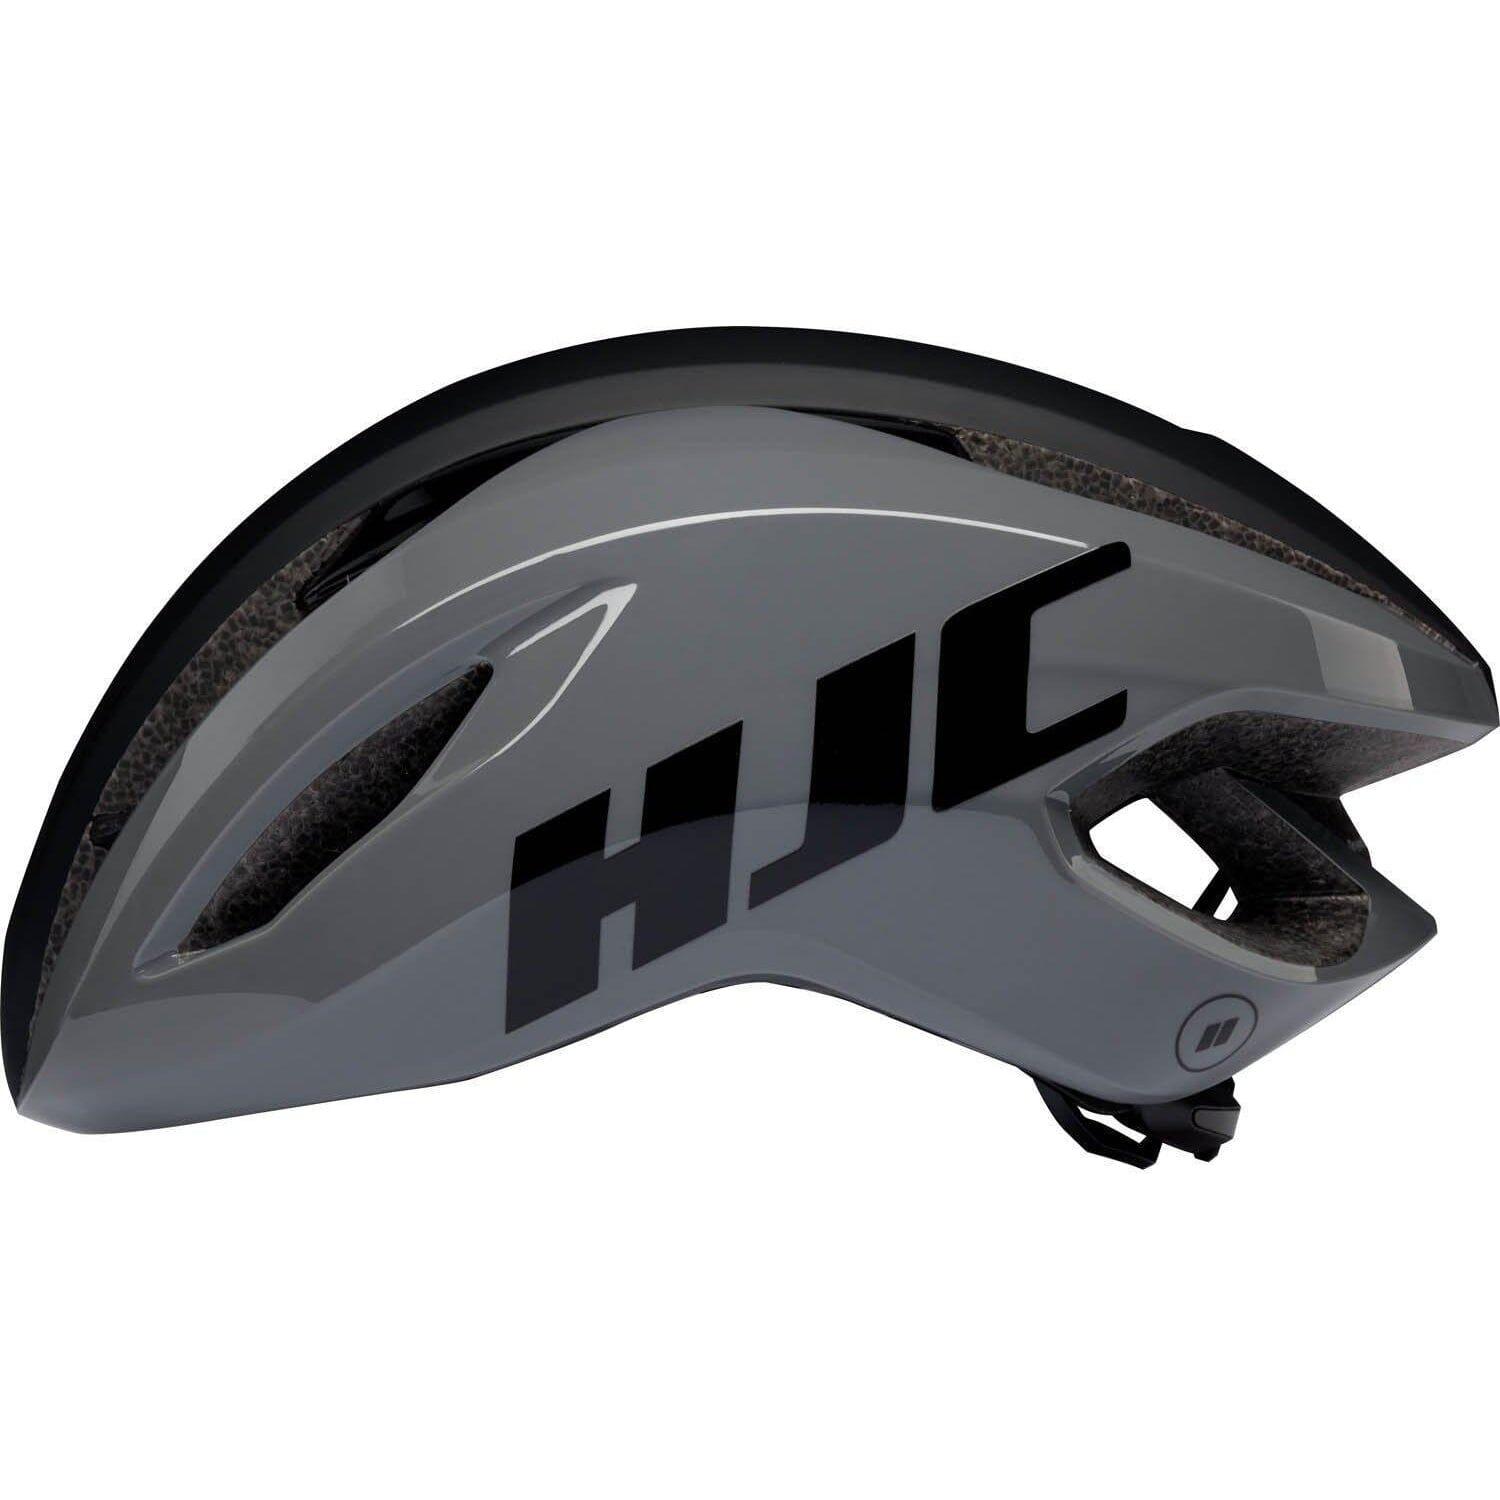 HJC Veleco: Streamlined, Comfy Helmet for Road Cycling 6/6